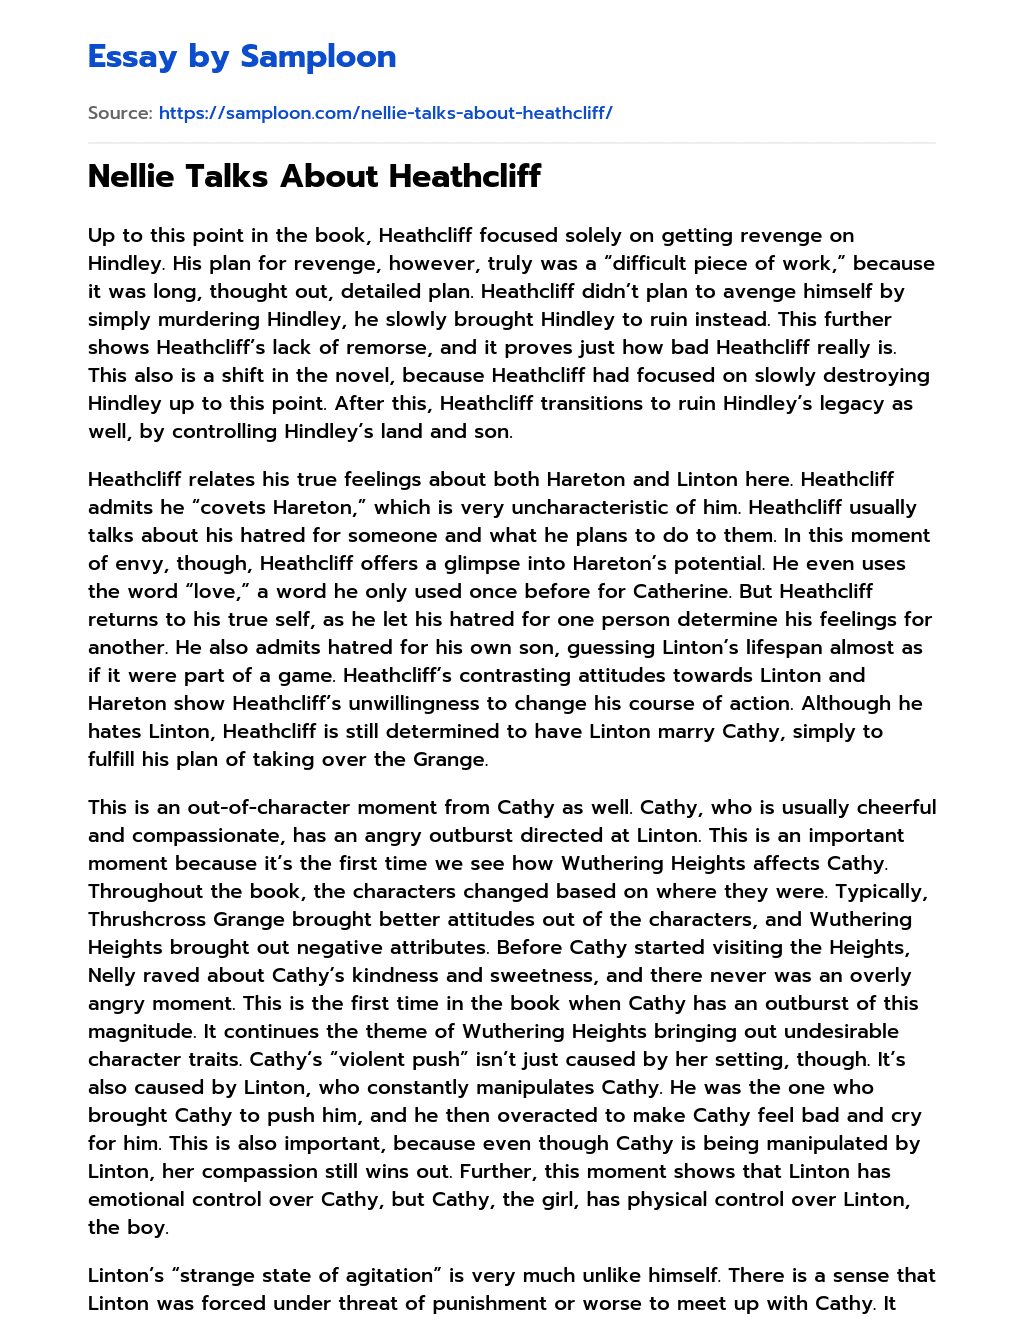 Nellie Talks About Heathcliff essay